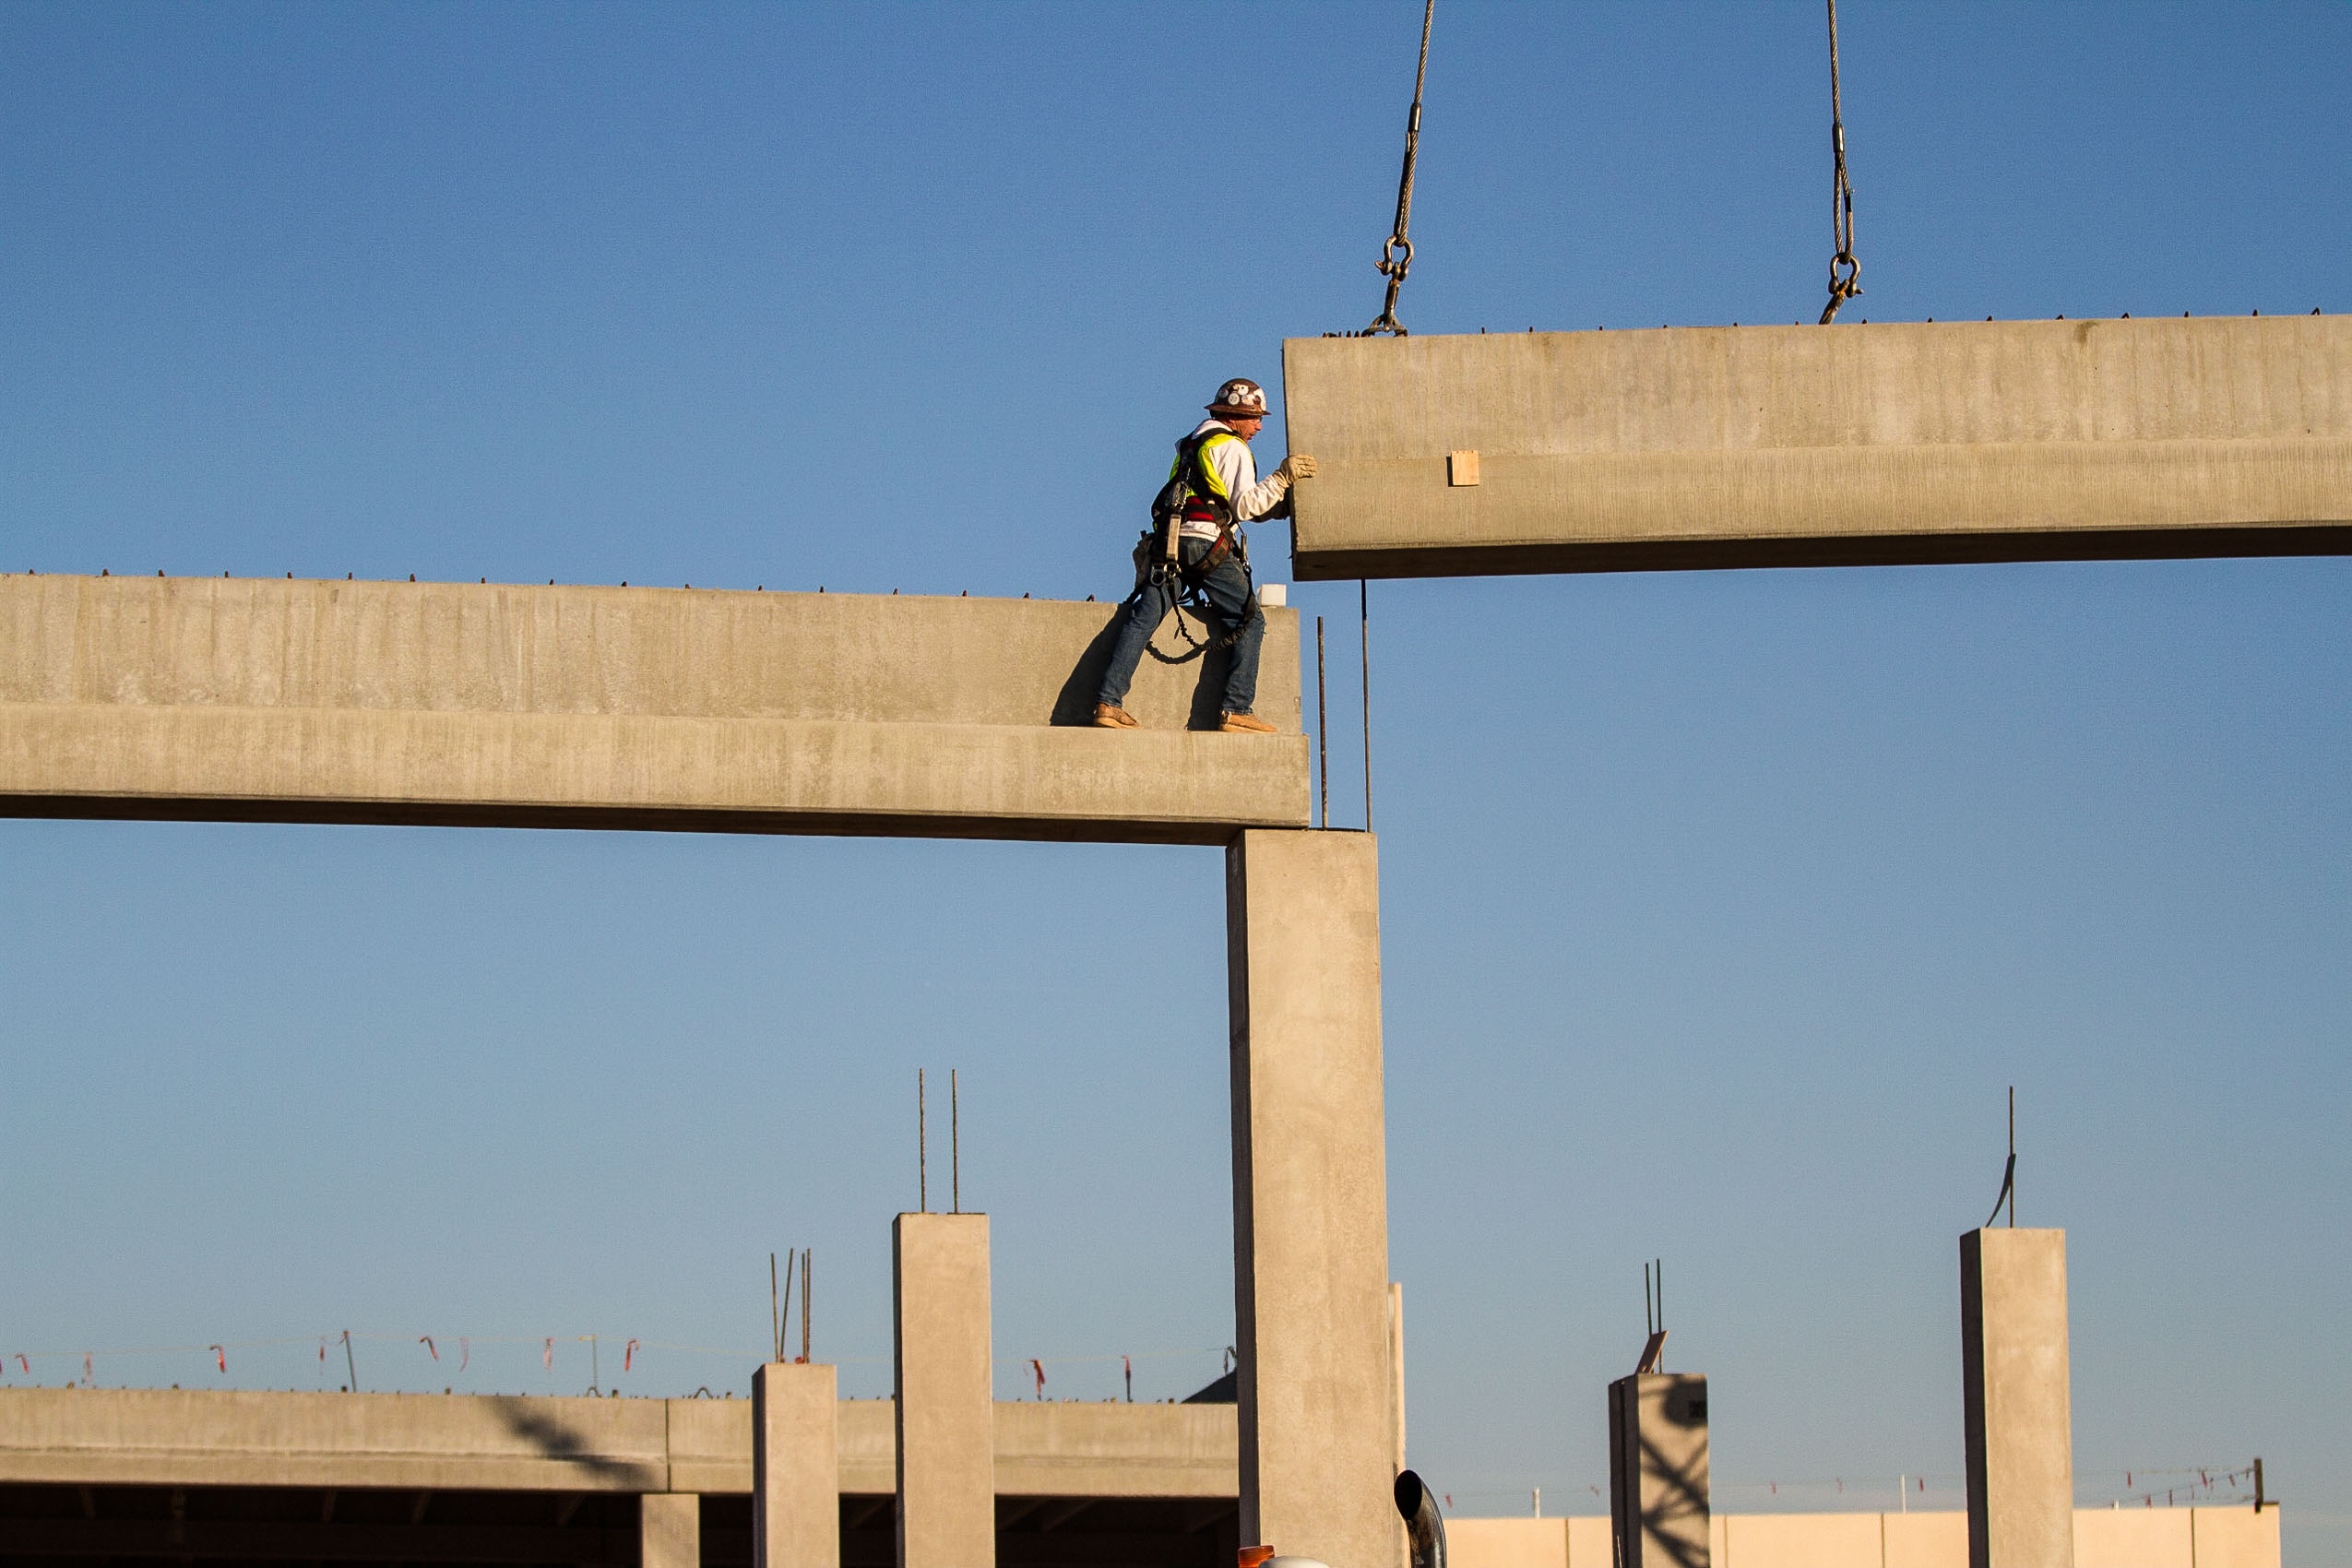 Heavy lift construction photographer Rich Crowder